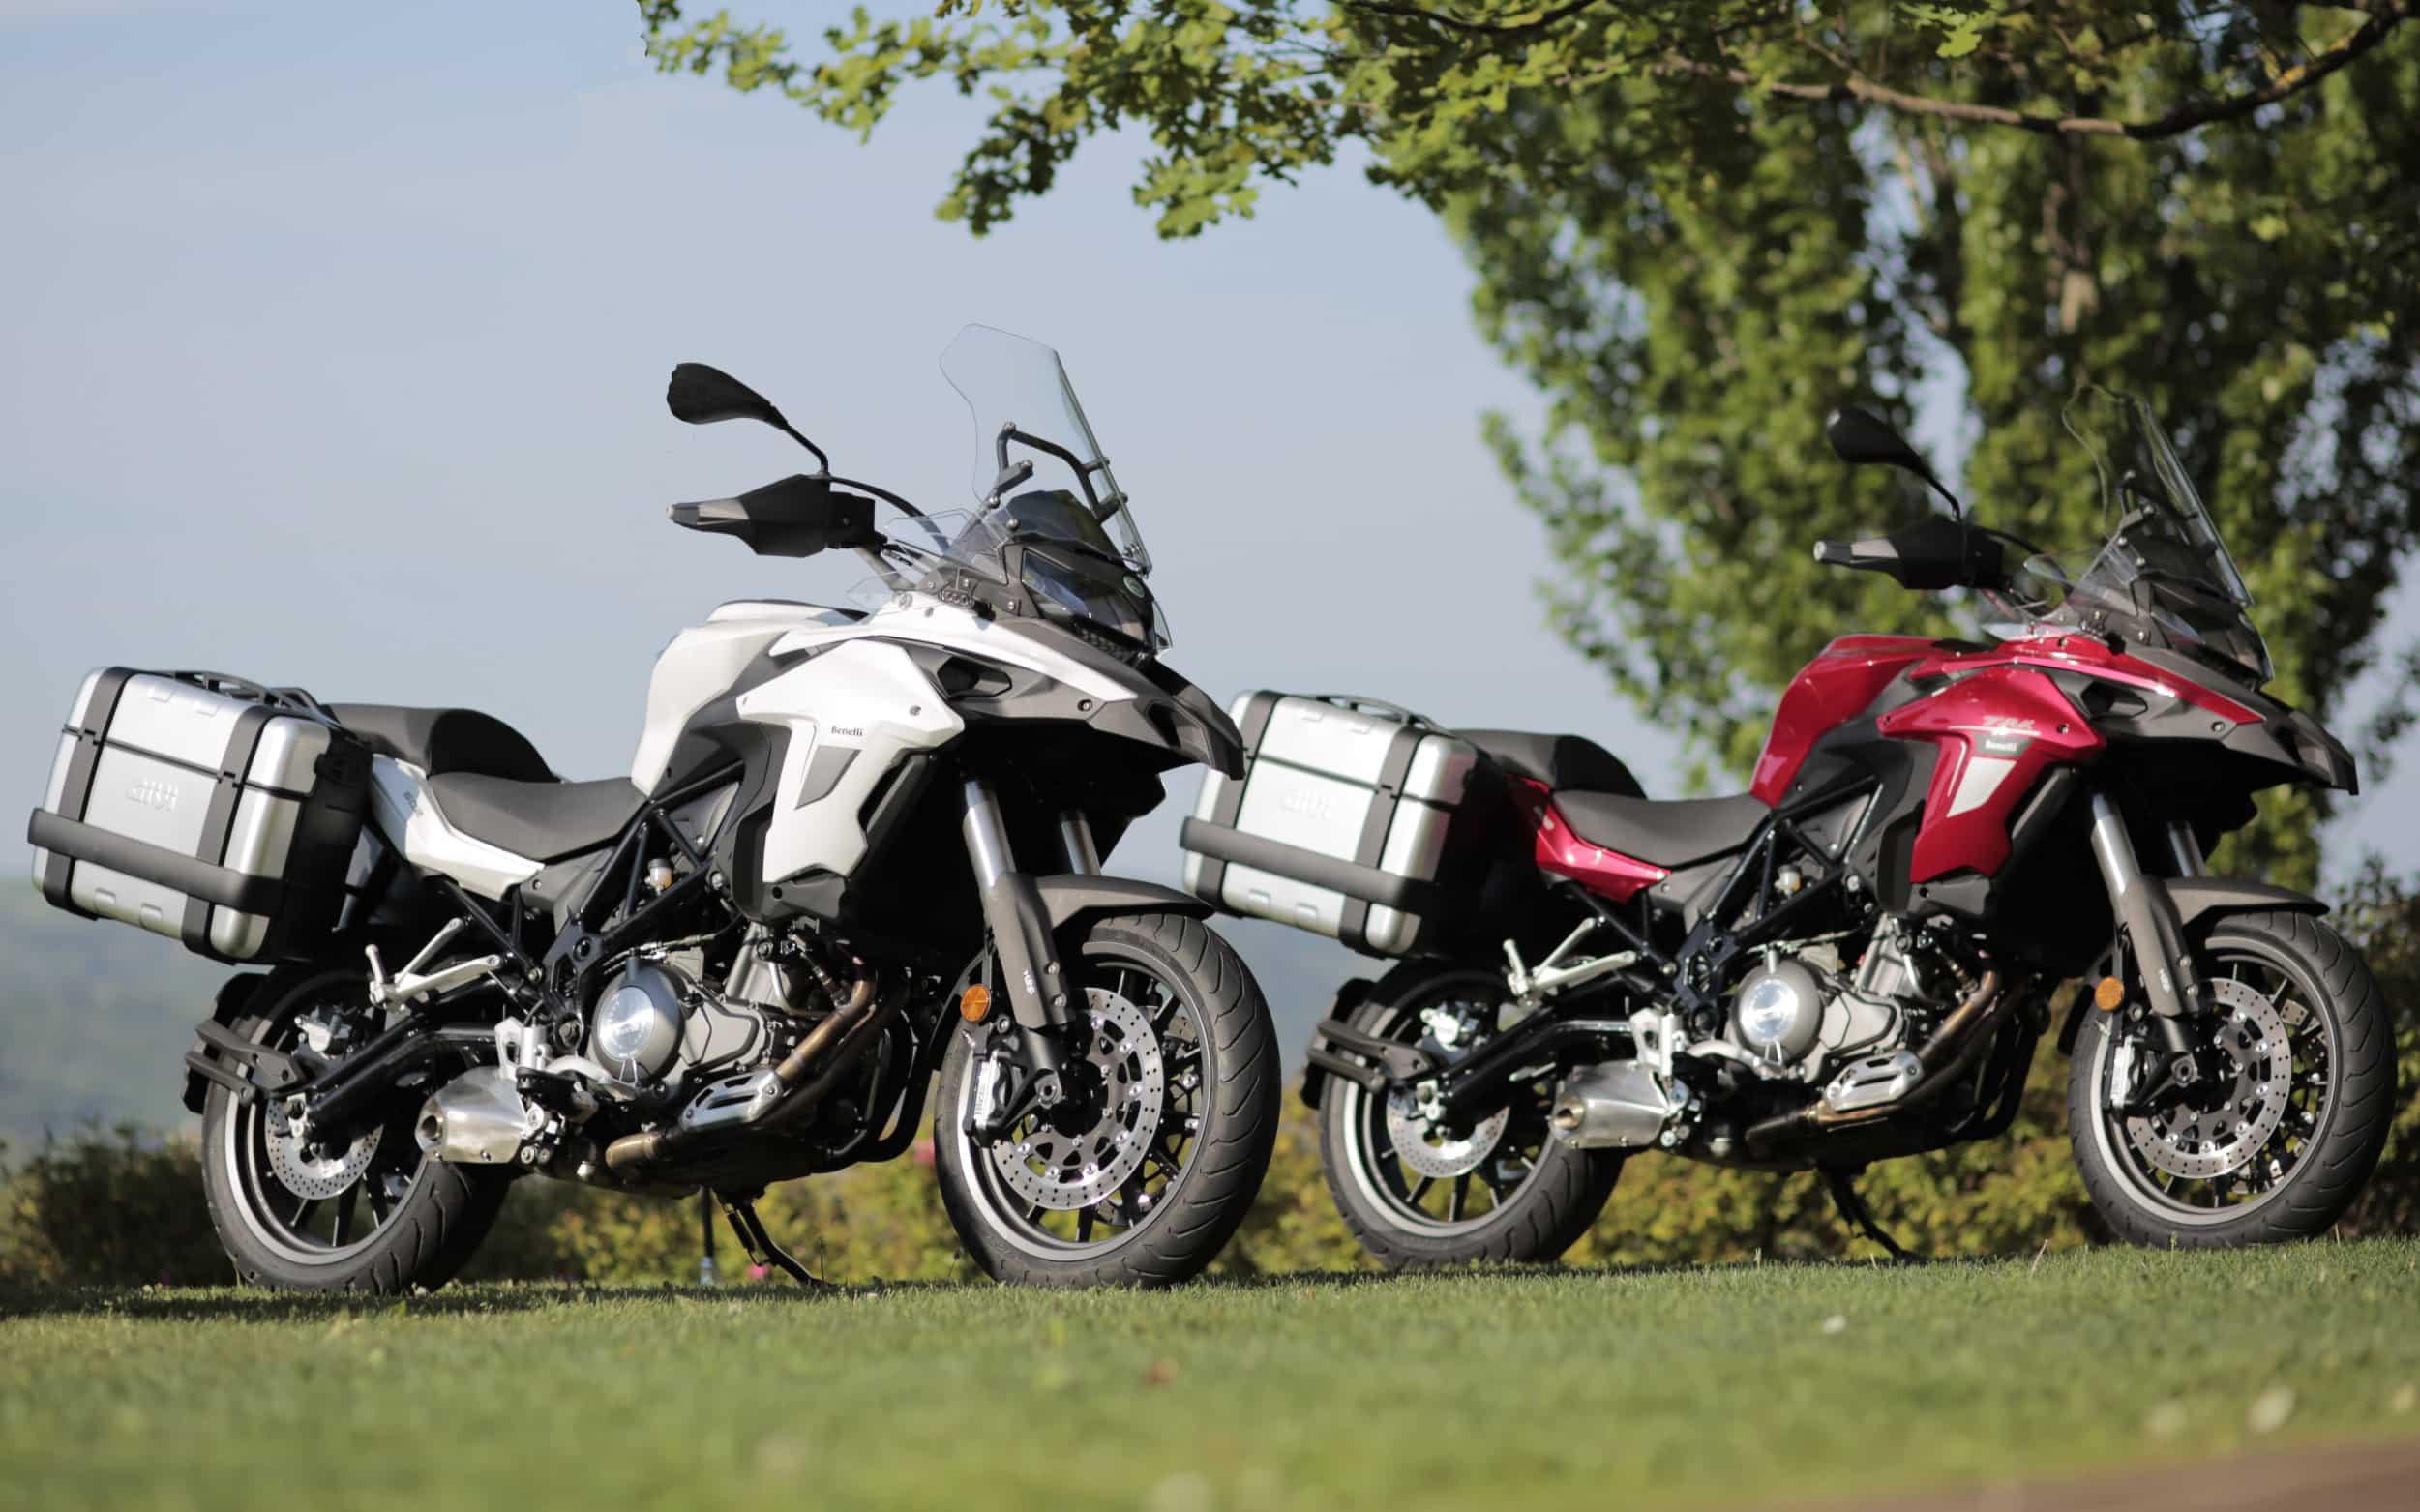 Benelli TNT 150 & TRK 502 Tourer Motorbikes Now Available in Pakistan 